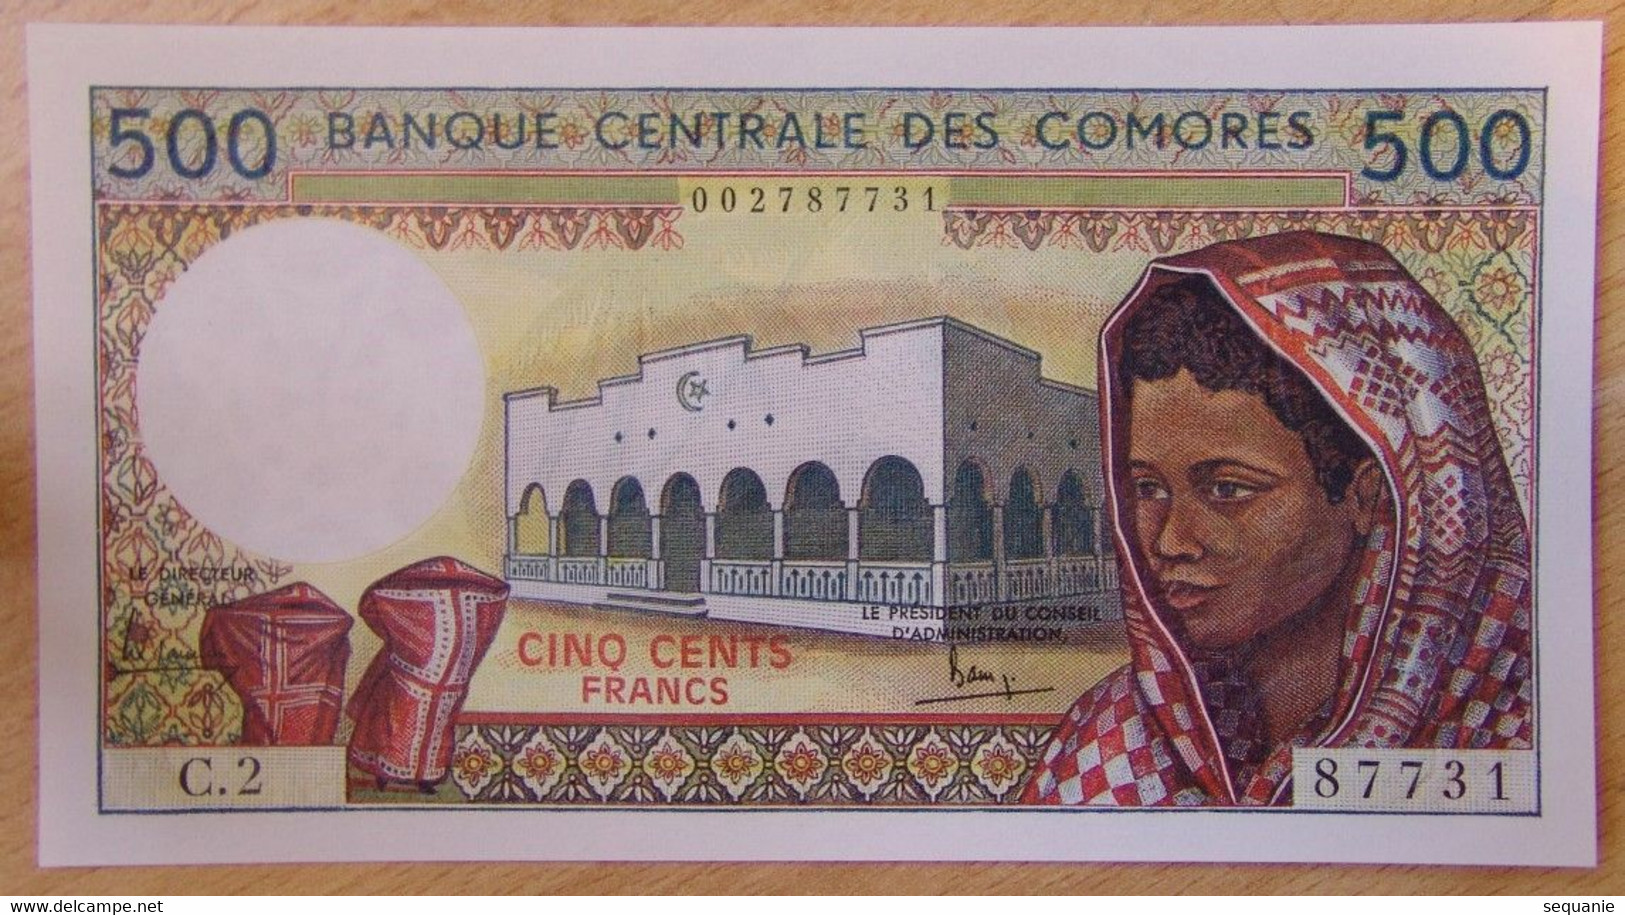 Les Comores - 500 Francs ND (1976) Banque Centrale Des Comores - Comoros